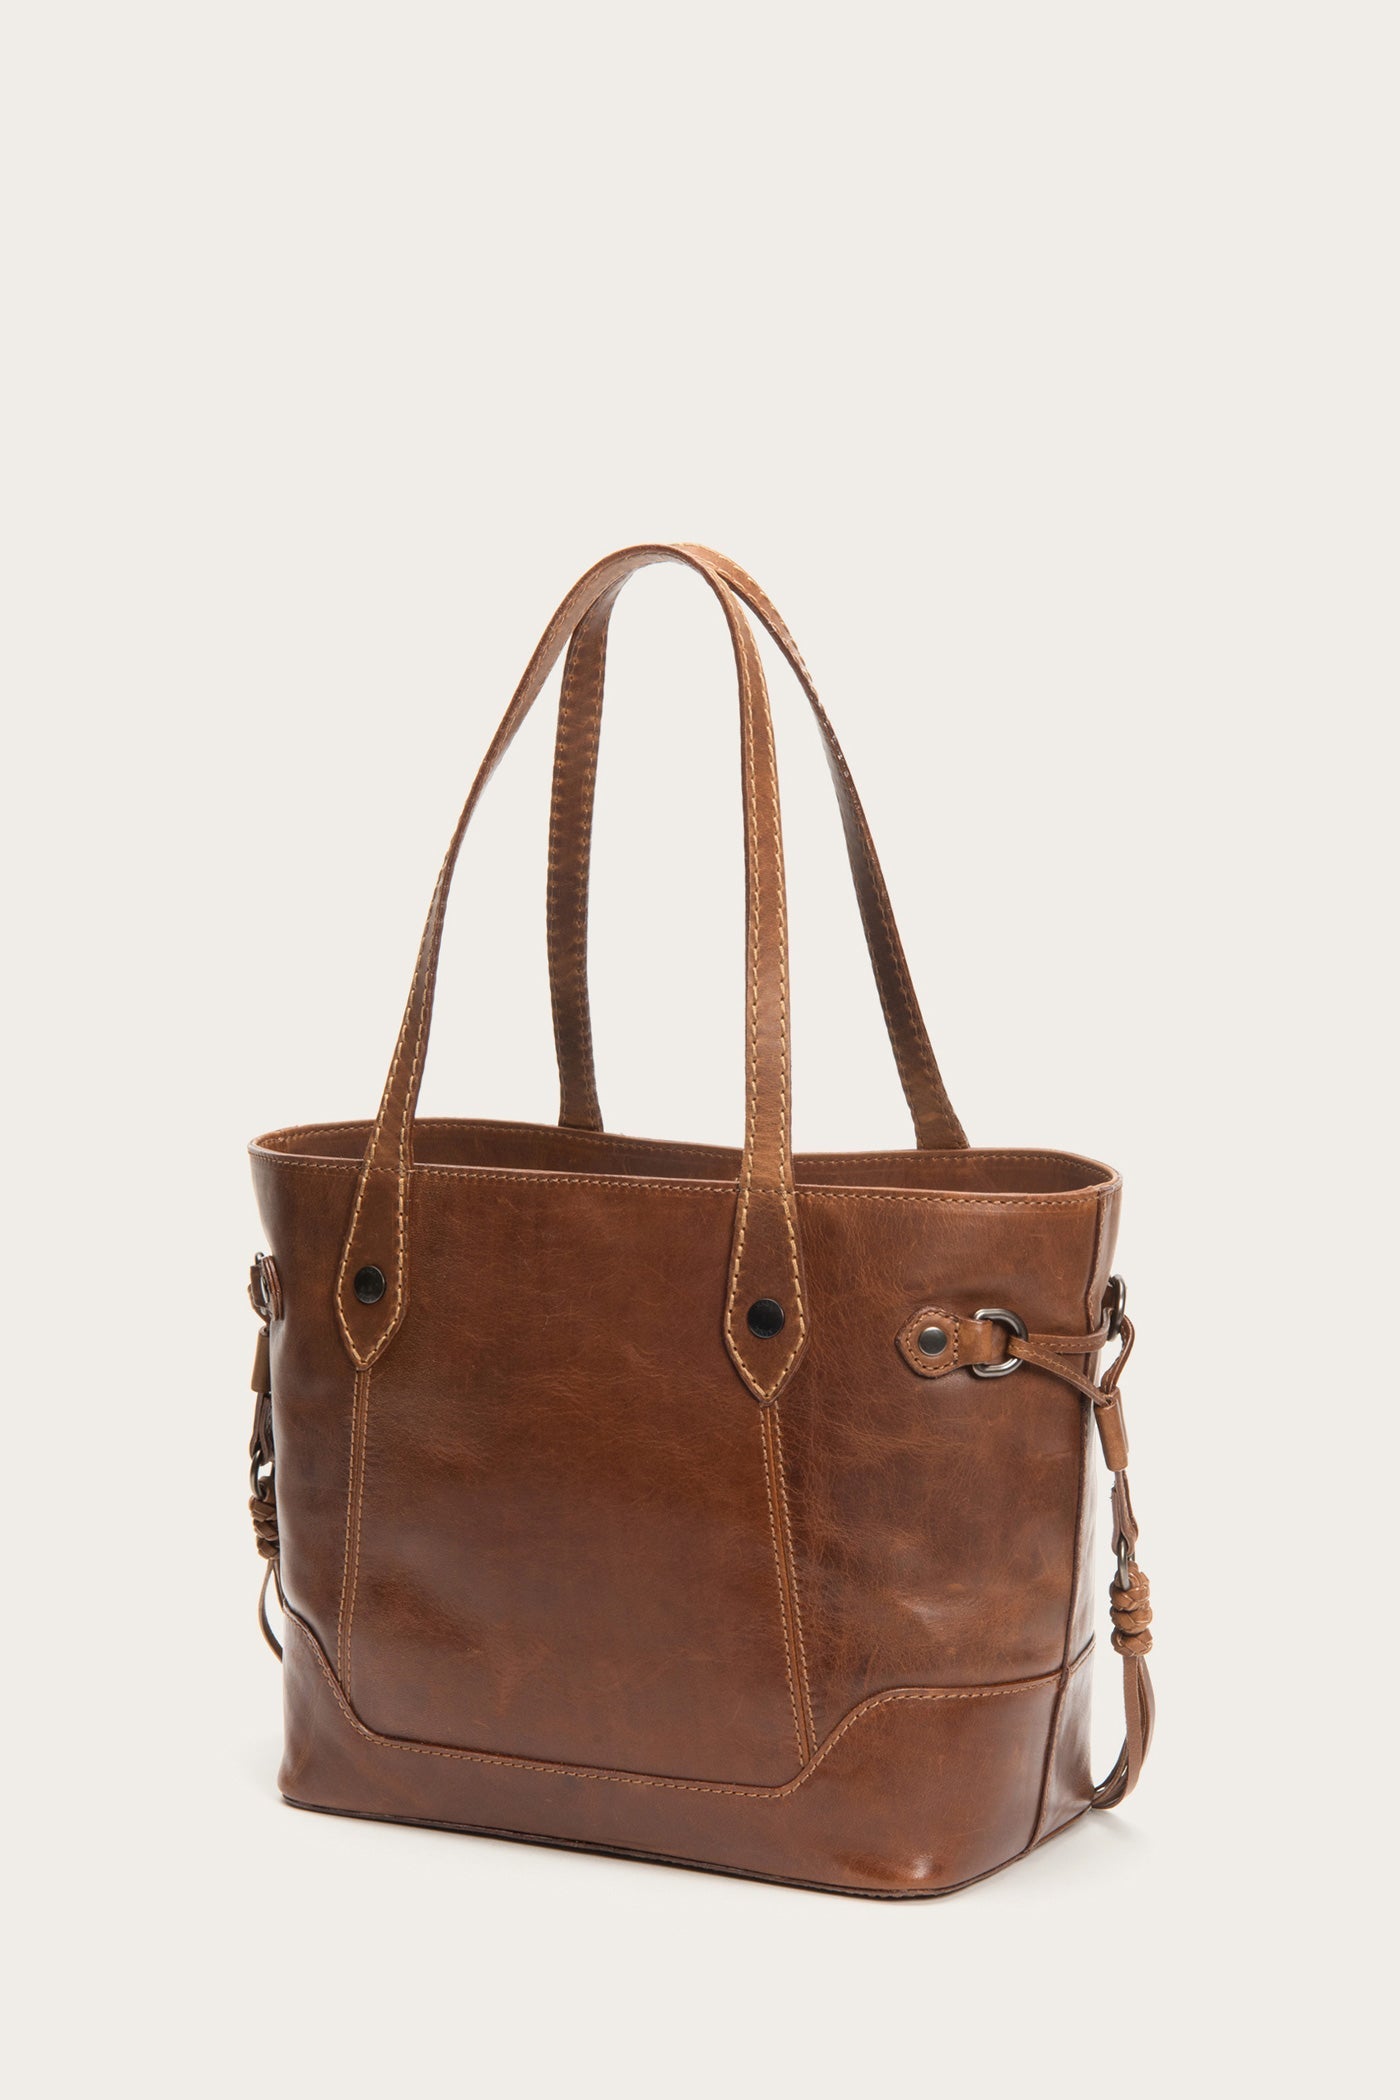 Buy FRYE Melissa Satchel Handbag,Dark Brown,One Size at Amazon.in